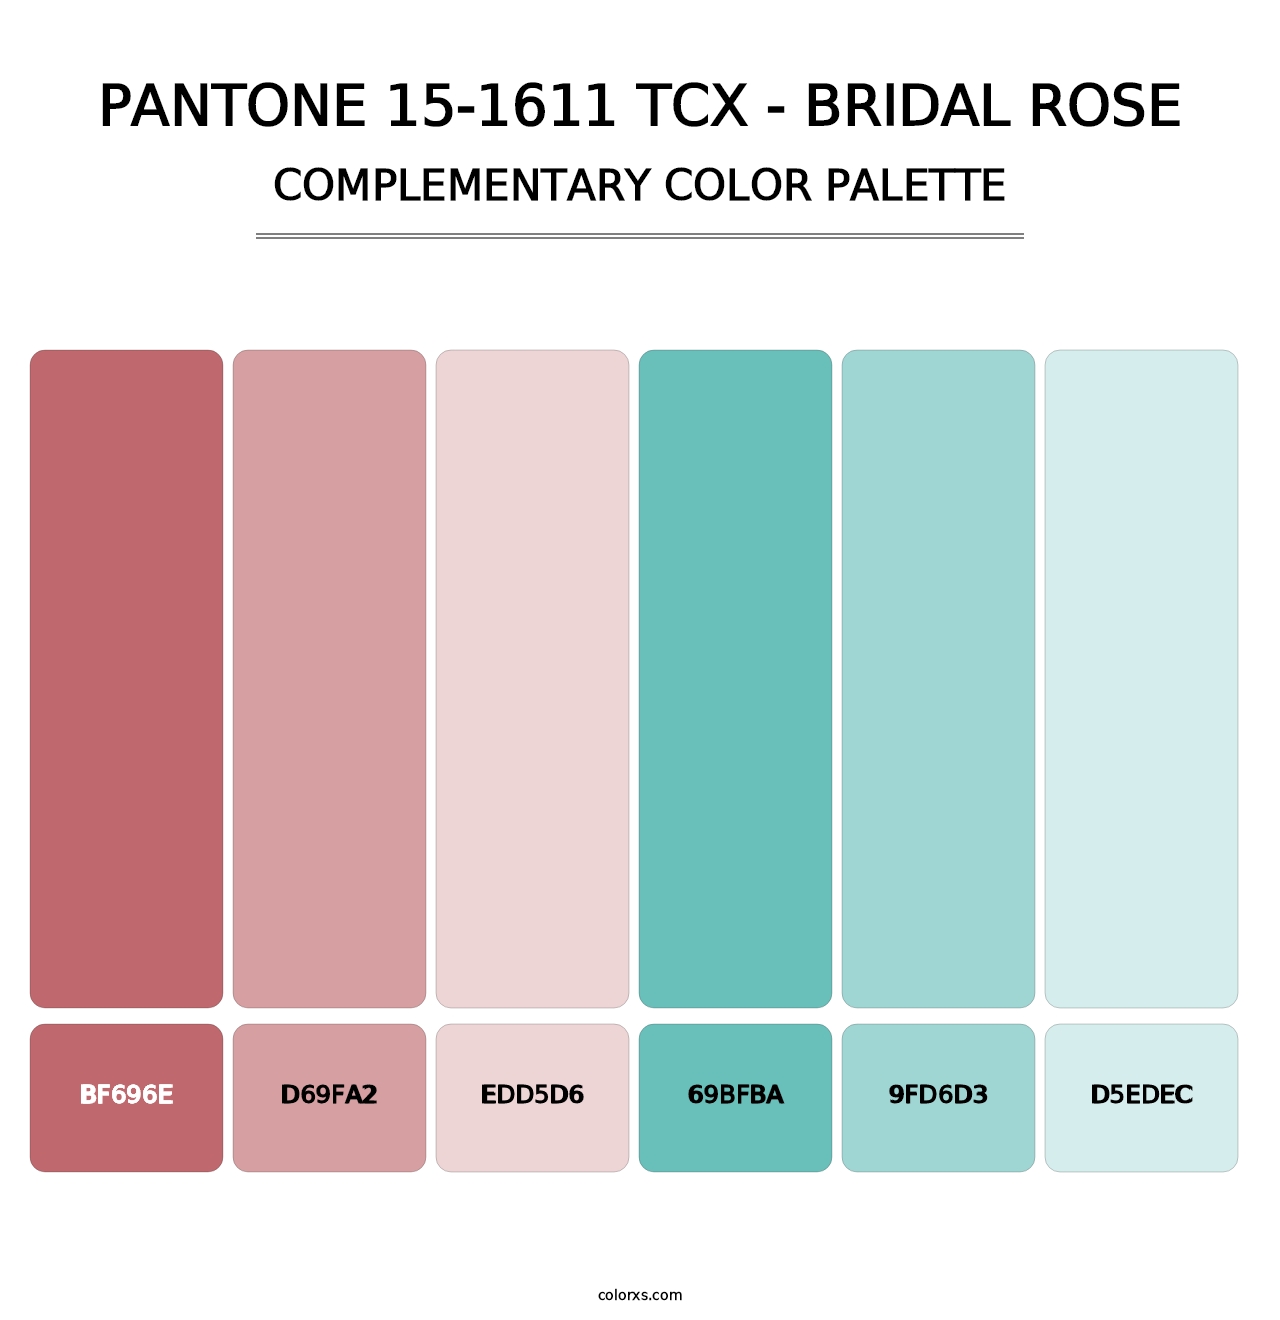 PANTONE 15-1611 TCX - Bridal Rose - Complementary Color Palette